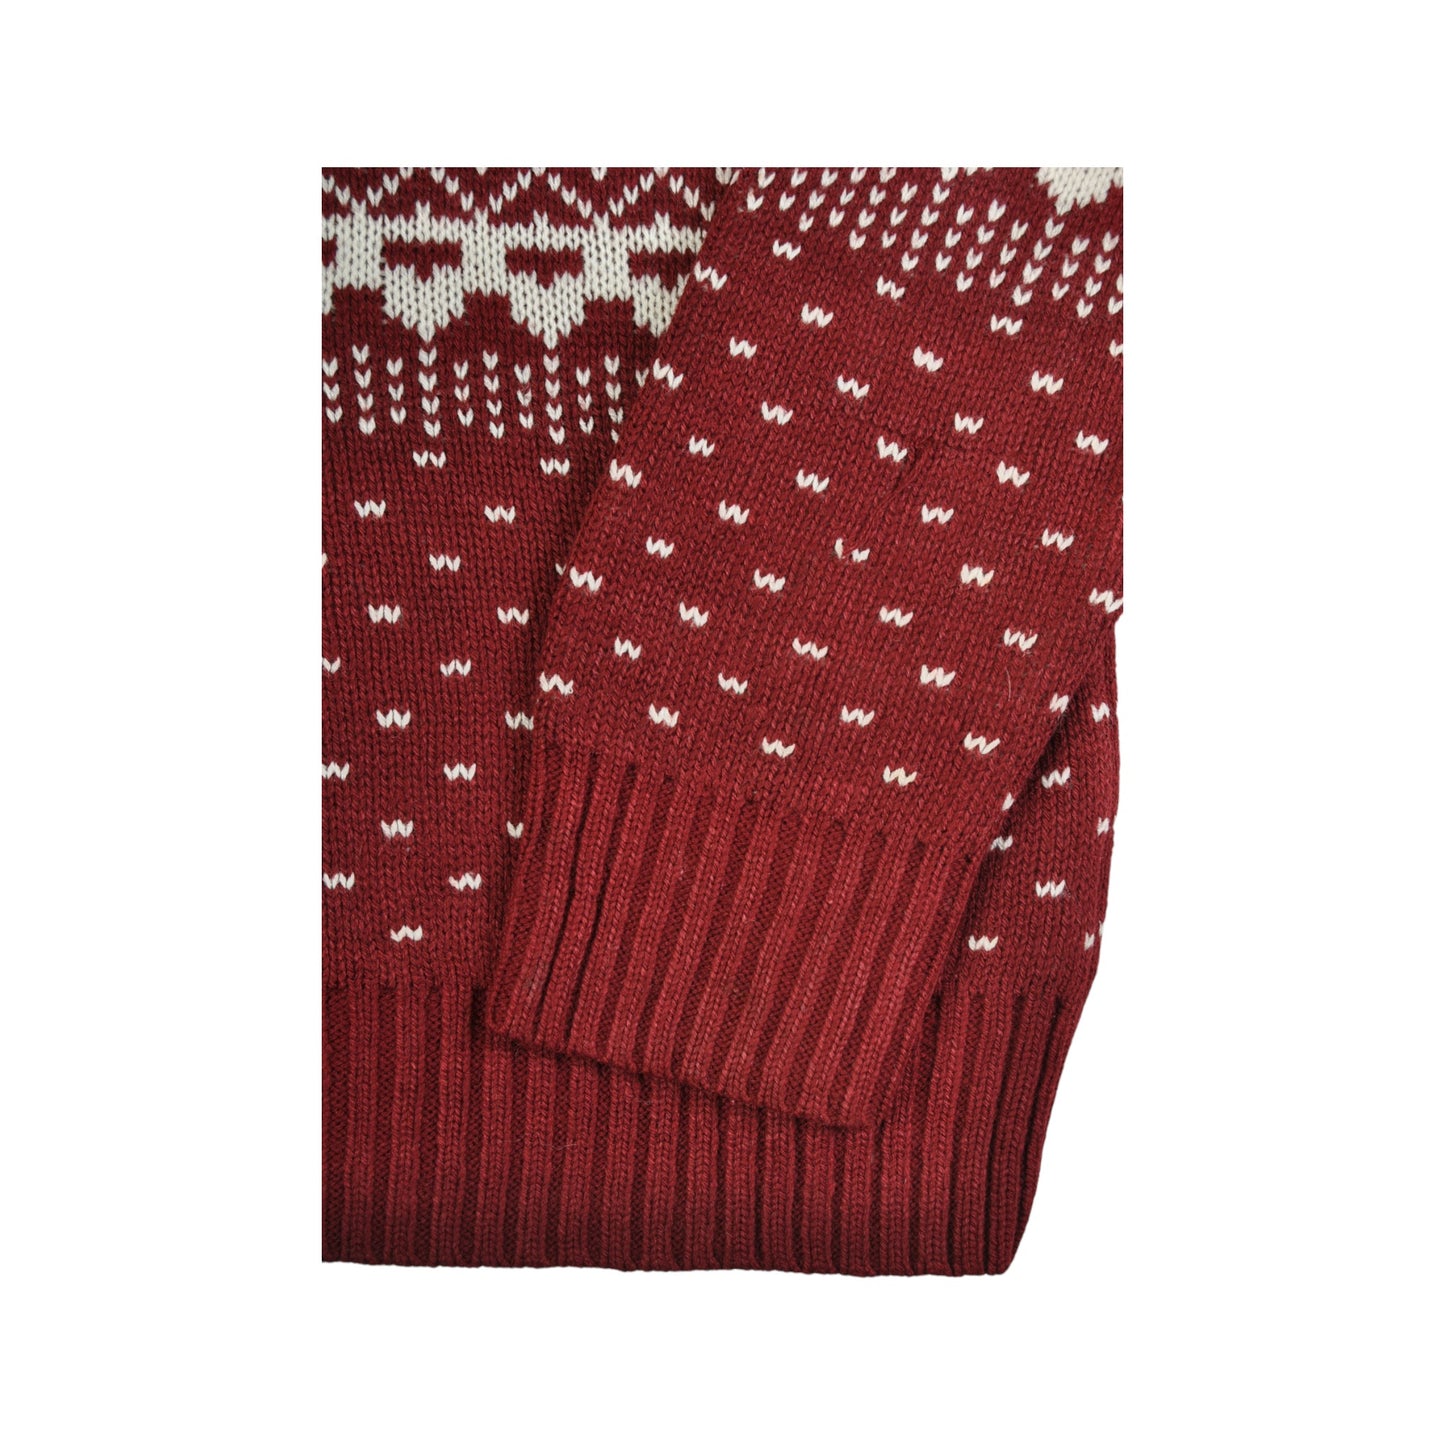 Vintage Knitted Jumper Retro Snowflake Pattern Red/White Ladies Medium